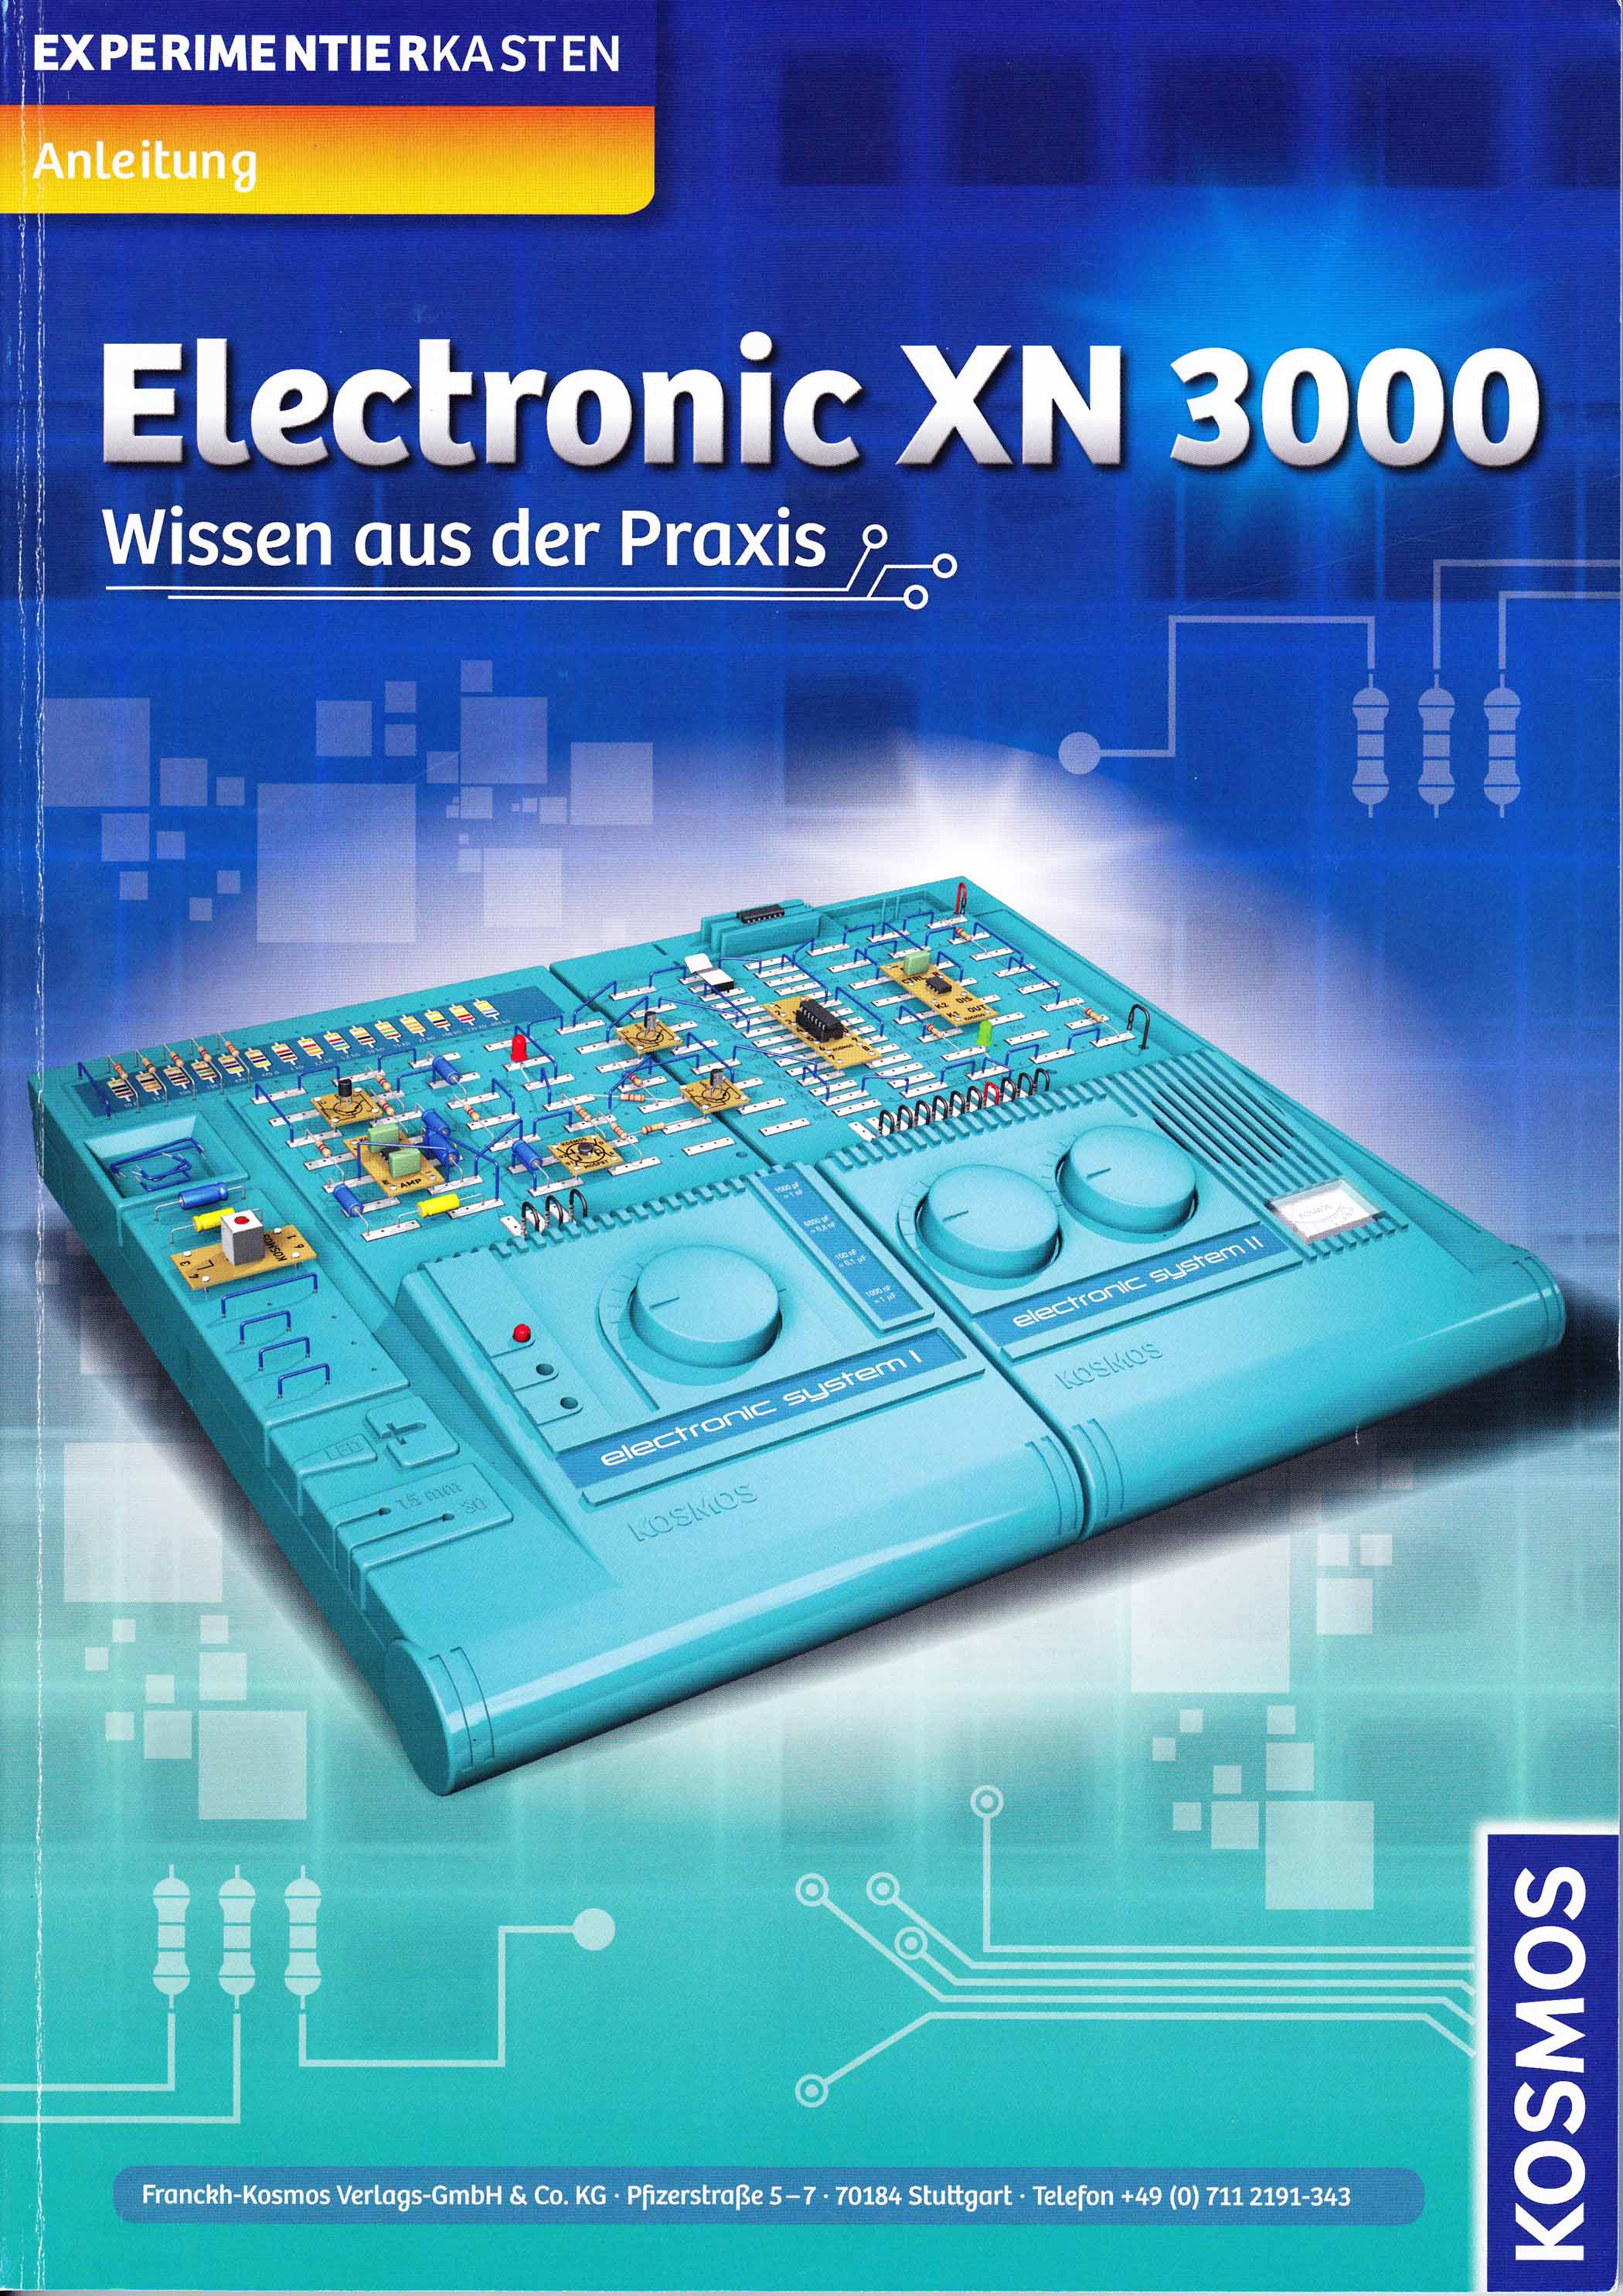 DAS EXPERIMENTIERKASTEN-BOARD • Thema anzeigen - Electronic xn 3000